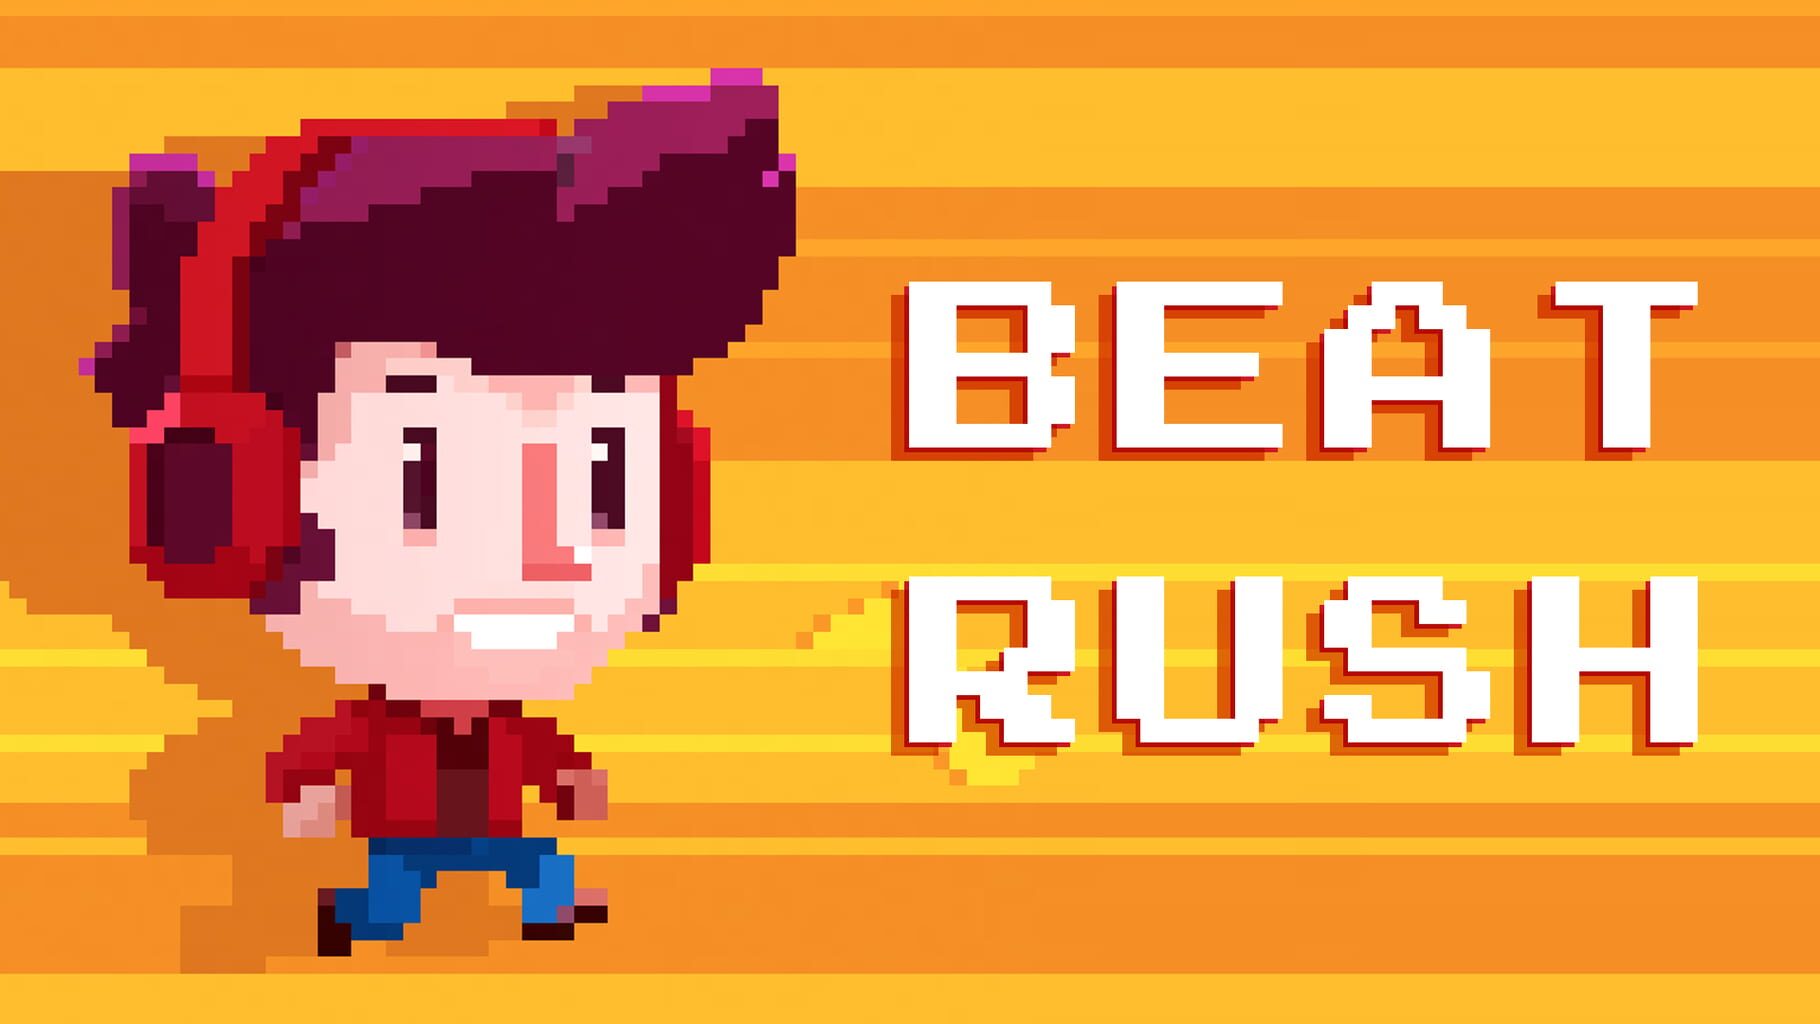 Beat Rush artwork